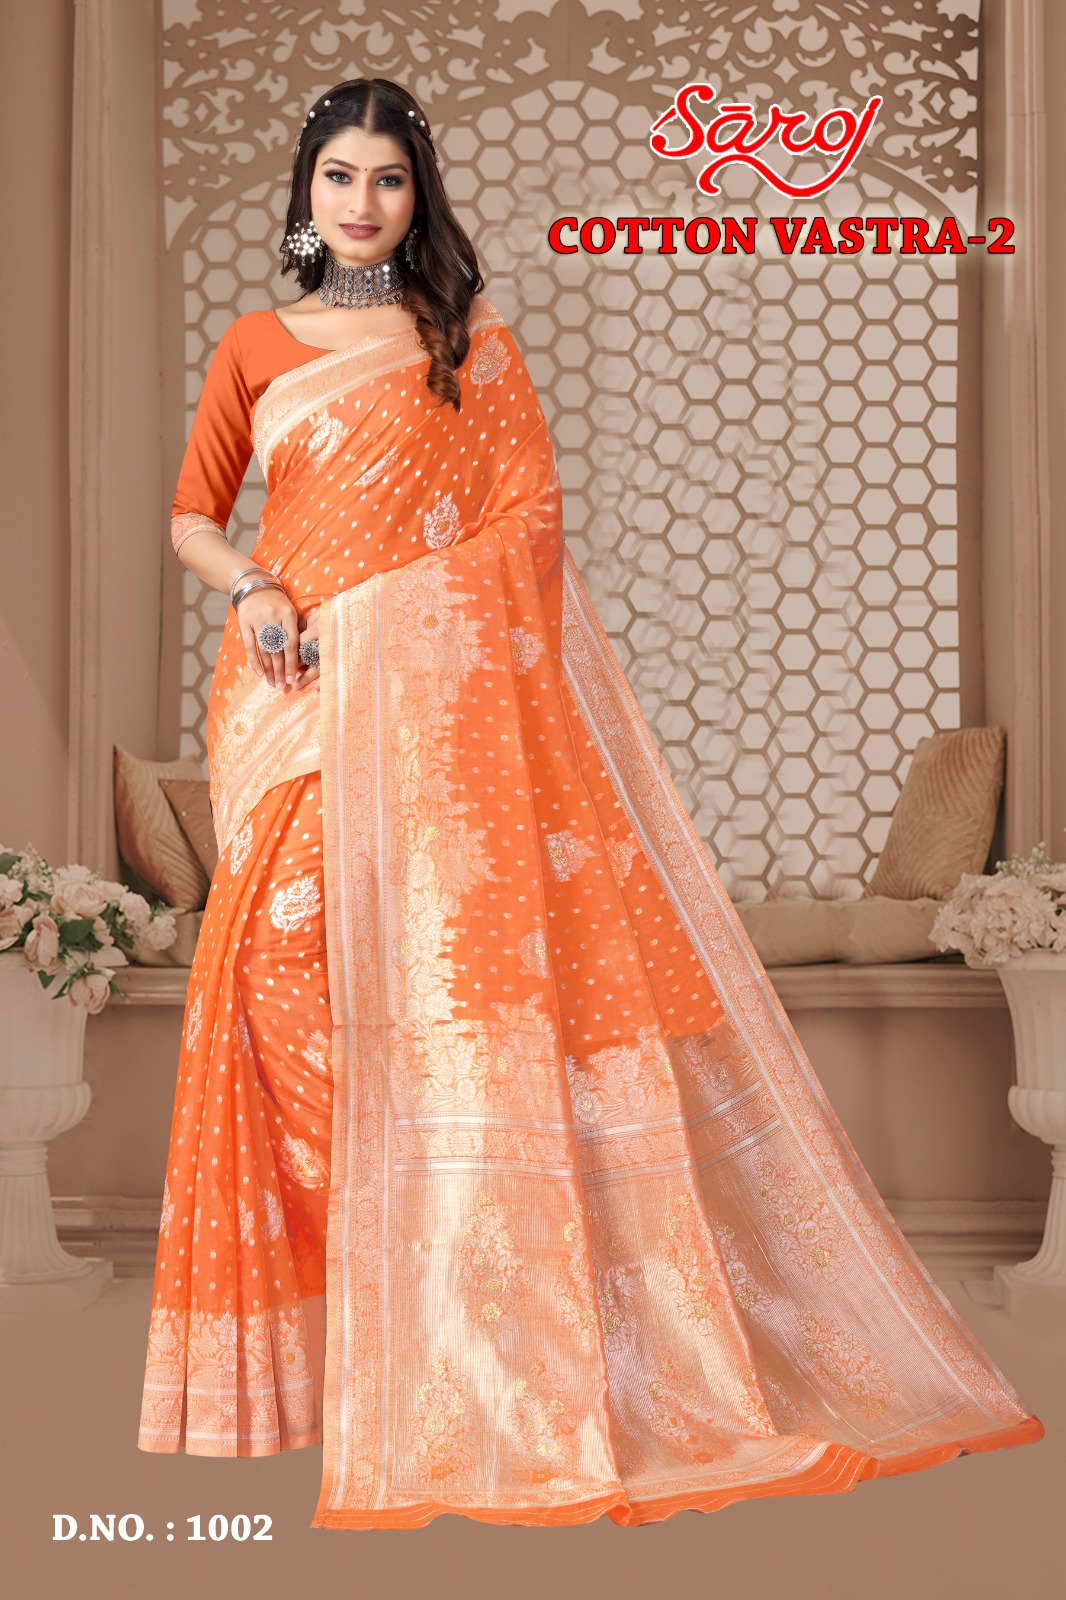 saroj saree cotton vastra 2 heavy cotton innovative look saree catalog